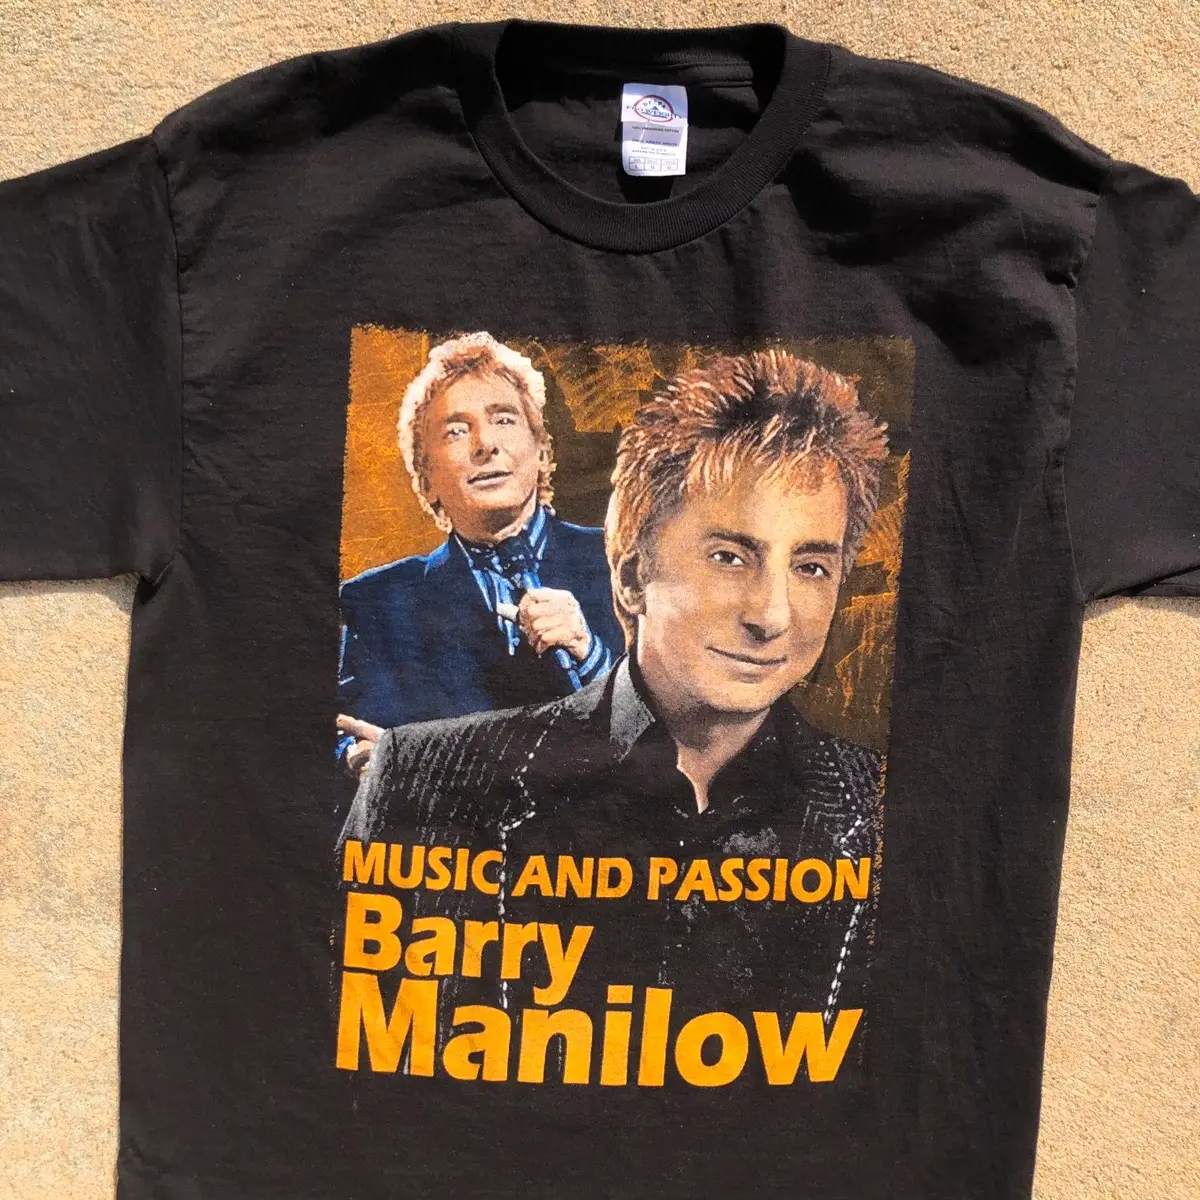 Mandy Lyrics Barry Manilow T- Shirt, Barry Manilow Outfits T- Shirt, Barry Manilow Best Songs T- Shirt